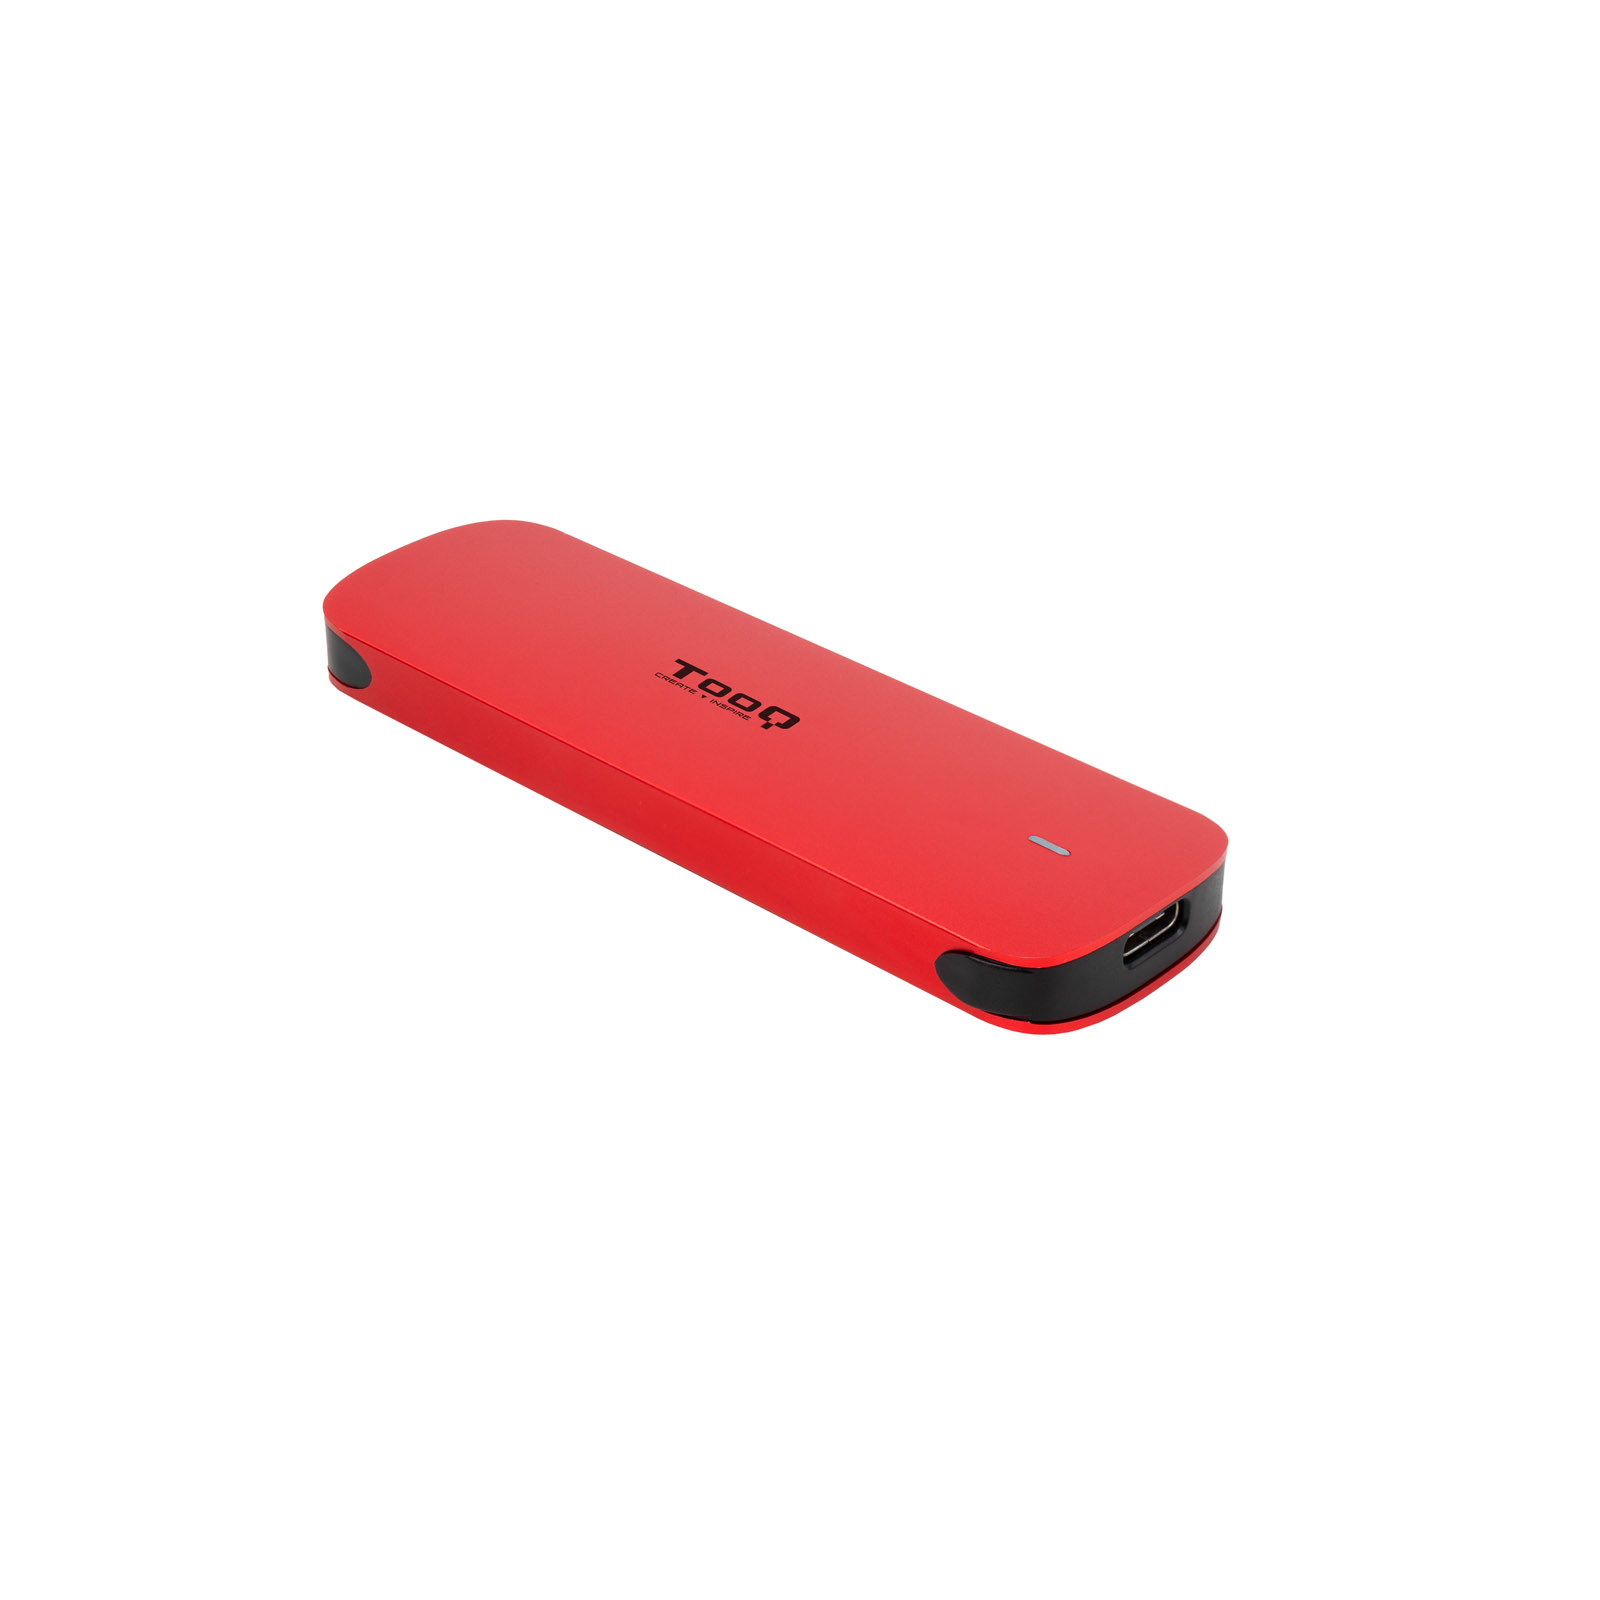 Caixa SSD Tooq M.2 NGFF/NVMe SSD USB 3.1 Gen 2 Aluminio Vermelho